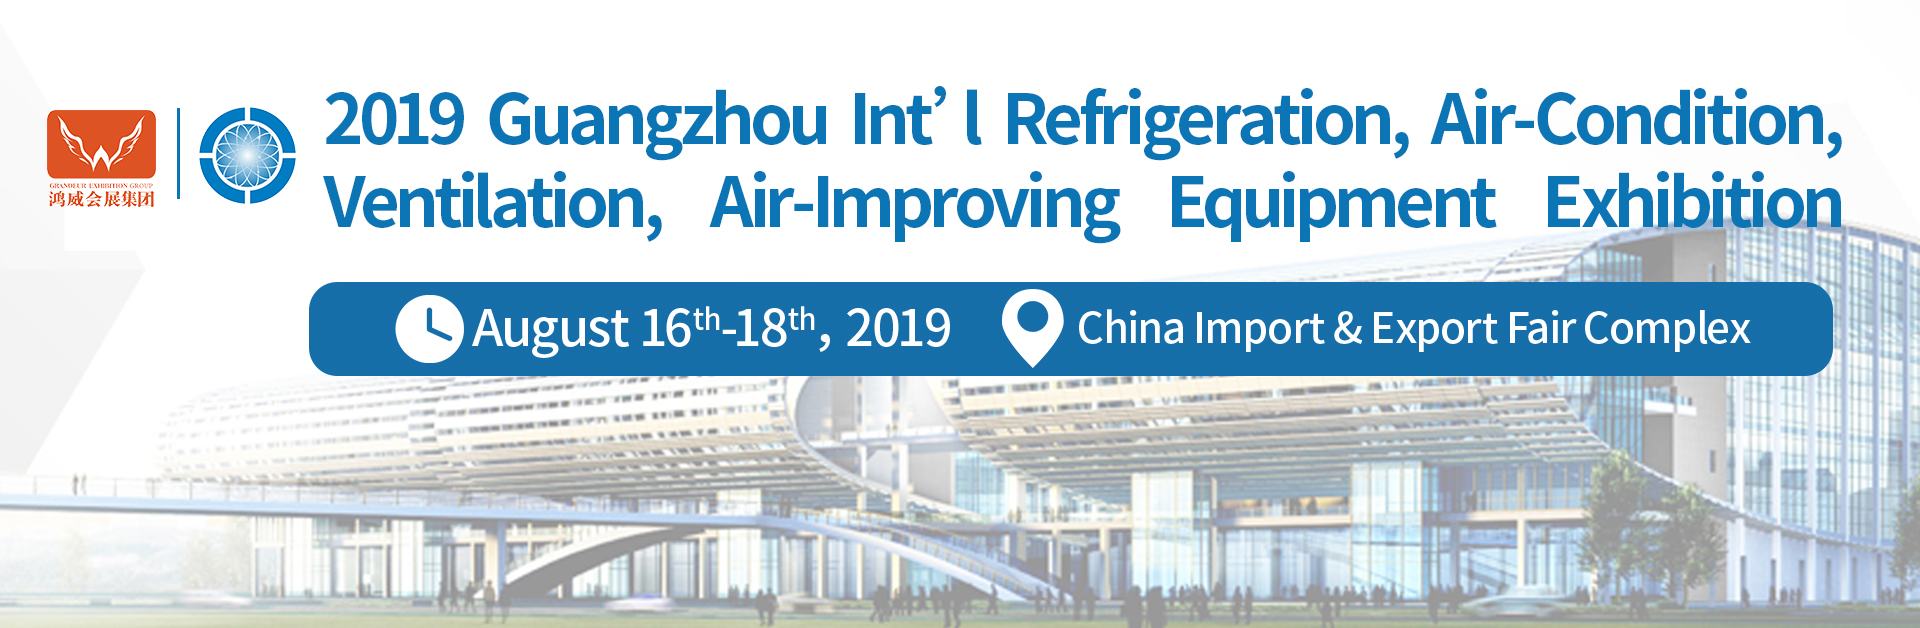 2019 Guangzhou Int’l Refrigeration, Air-Condition, Ventilation, Air-Improving Equipment Exhibition (AVAI China 2019), Guangzhou, Guangdong, China